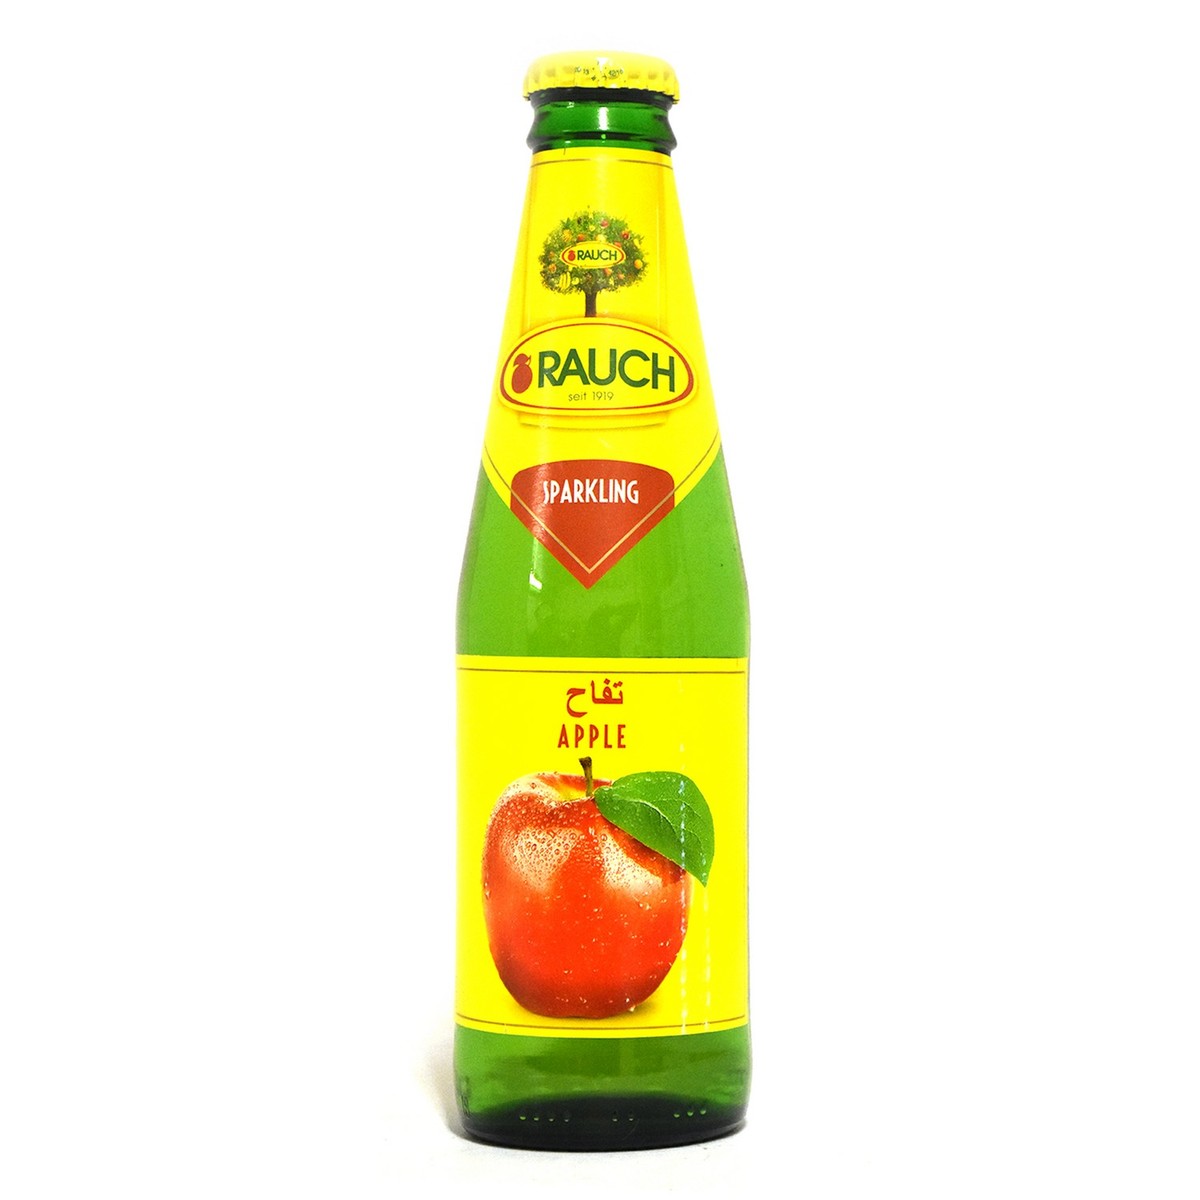 قم بشراء راوخ عصير تفاح فوار 250 مل Online At Best Price من الموقع من لولو هايبر ماركت Bottled Fruit Juice